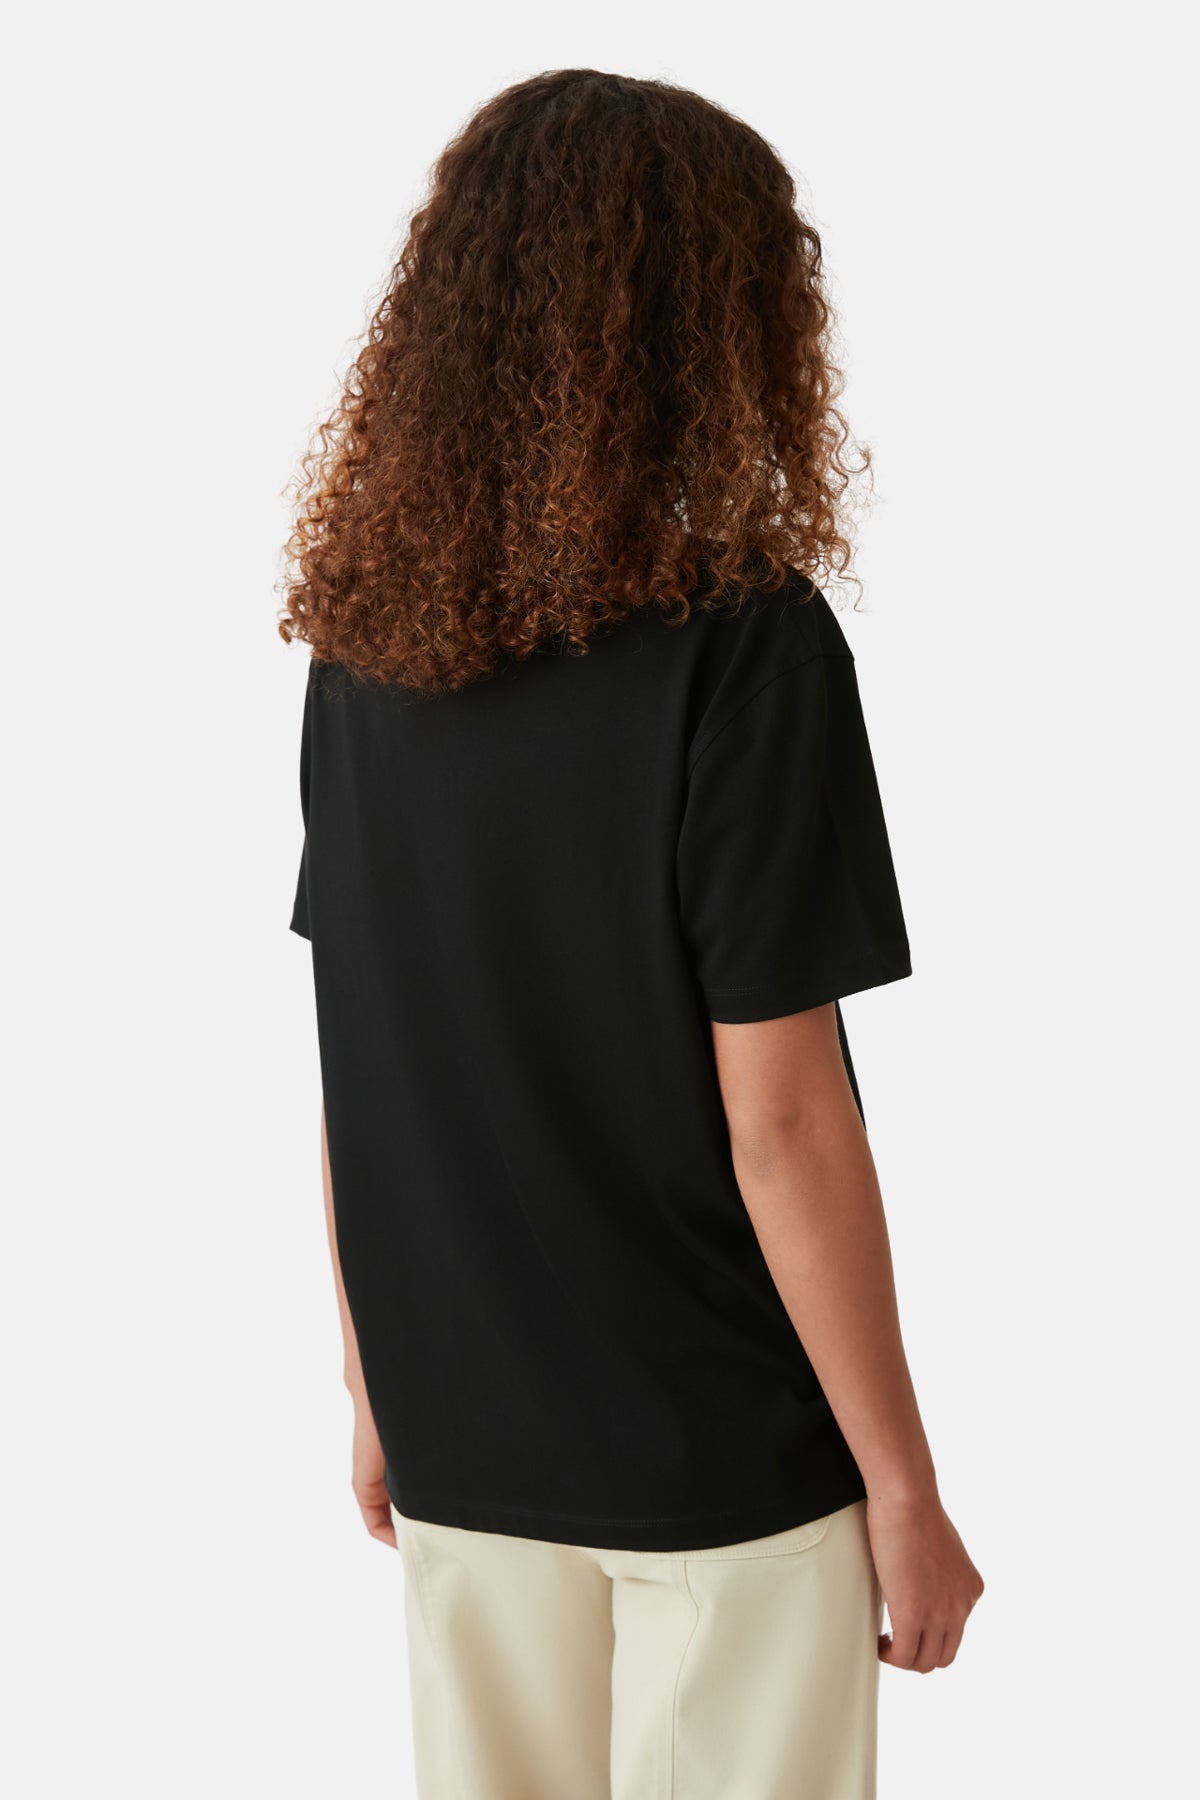 Mercan Yılanı Light-Weight T-shirt - Siyah